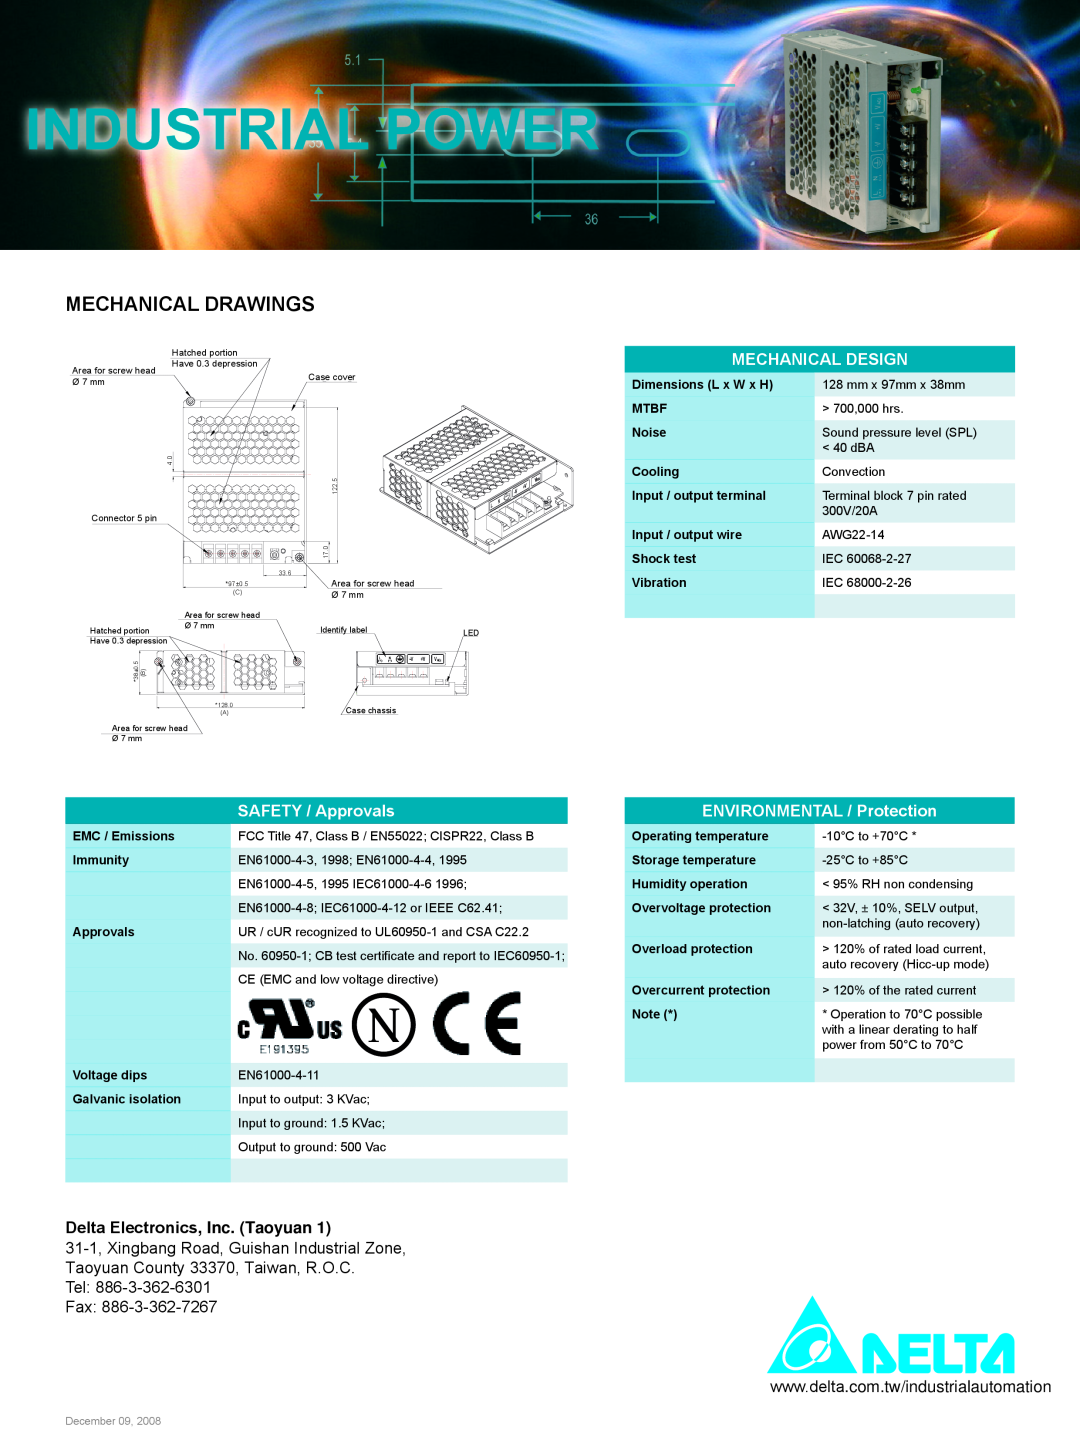 Delta Electronics 1-phase 35W Mechanical Drawings, Mechanical Design, SAFETY / Approvals, Delta Electronics, Inc. Taoyuan 